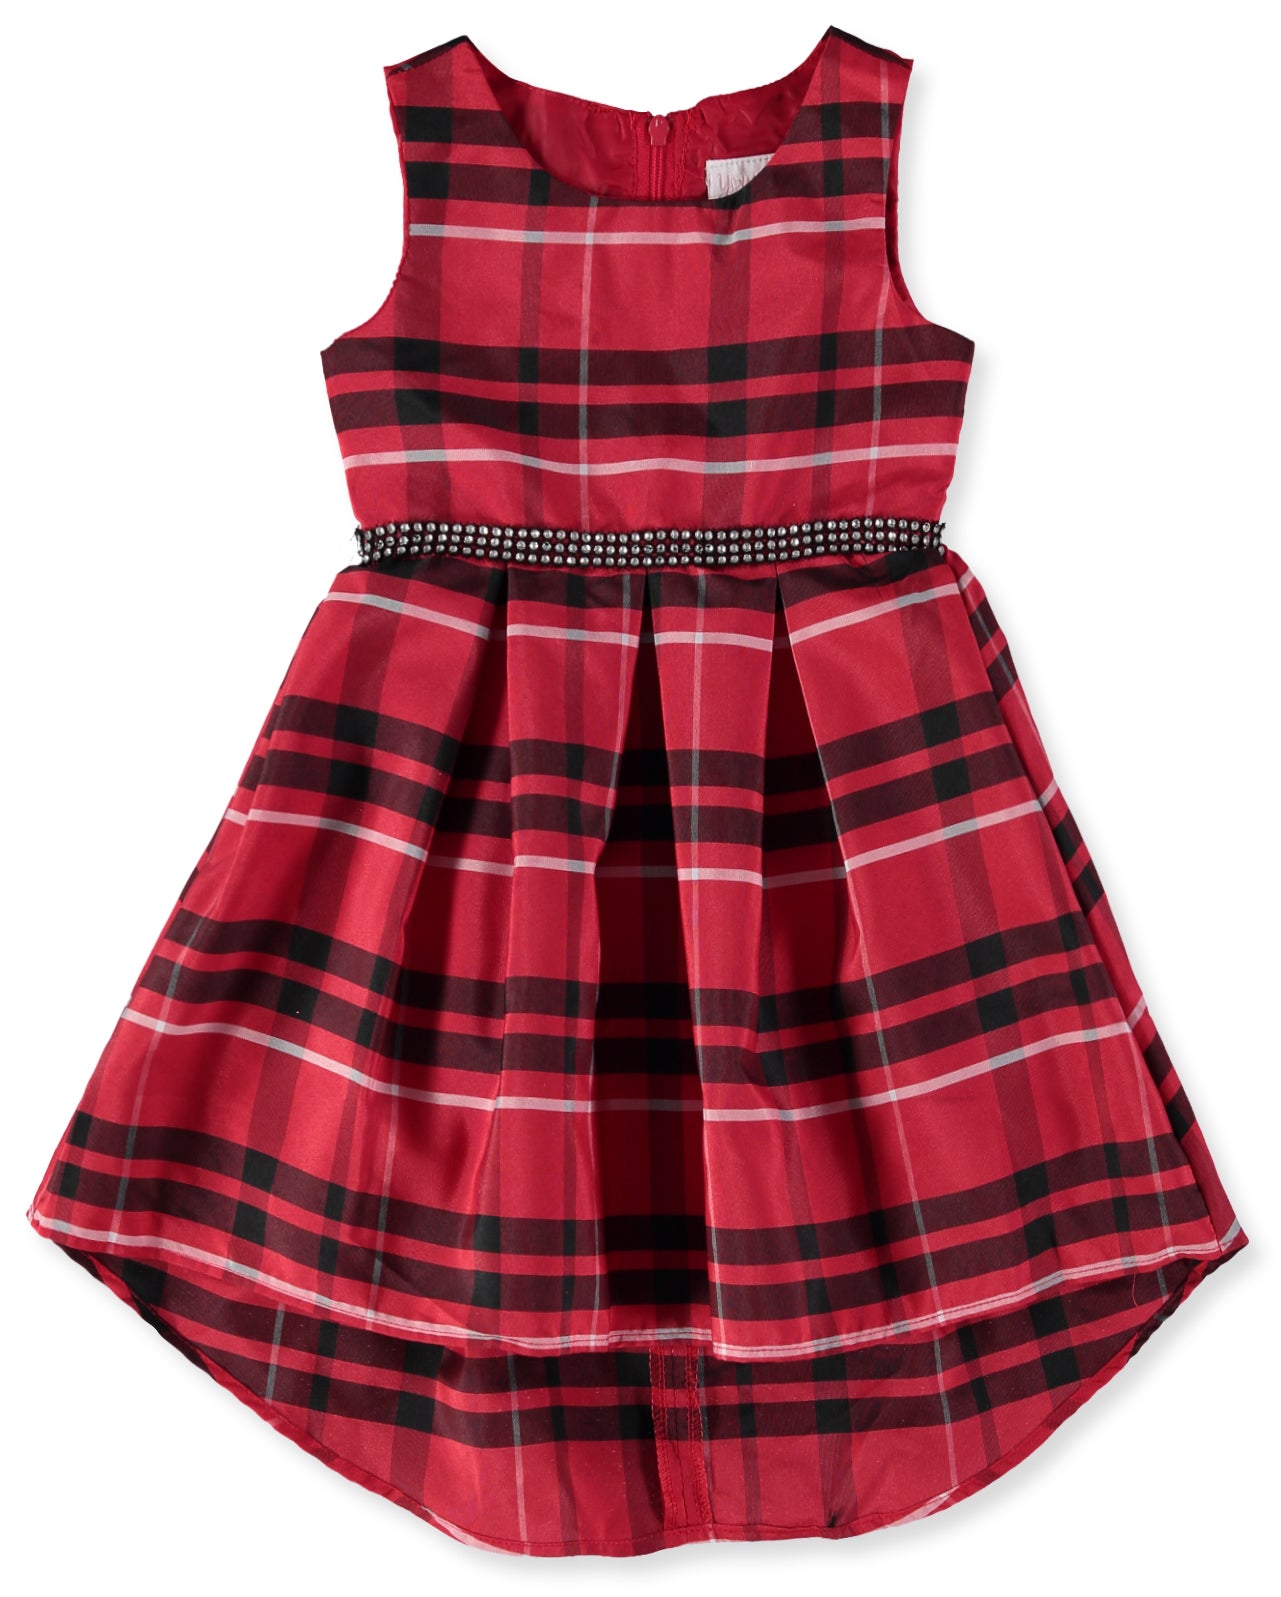 Emily West Girls 7-16 Shrug Plaid Dress